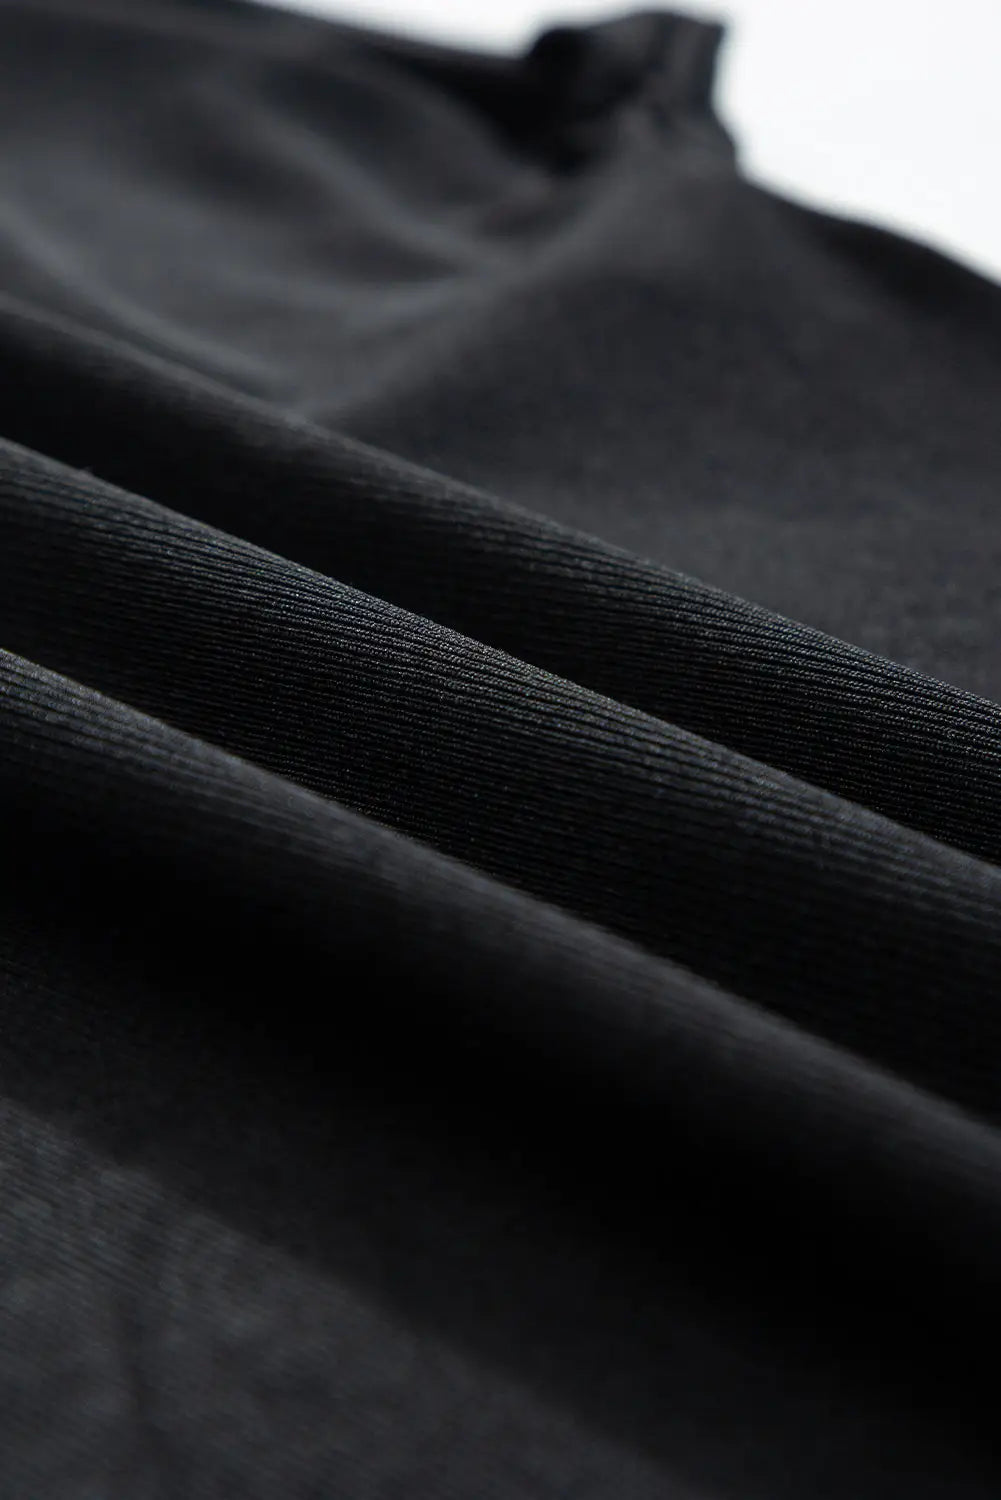 Black cowl neck bat sleeve t shirt - tops & tees